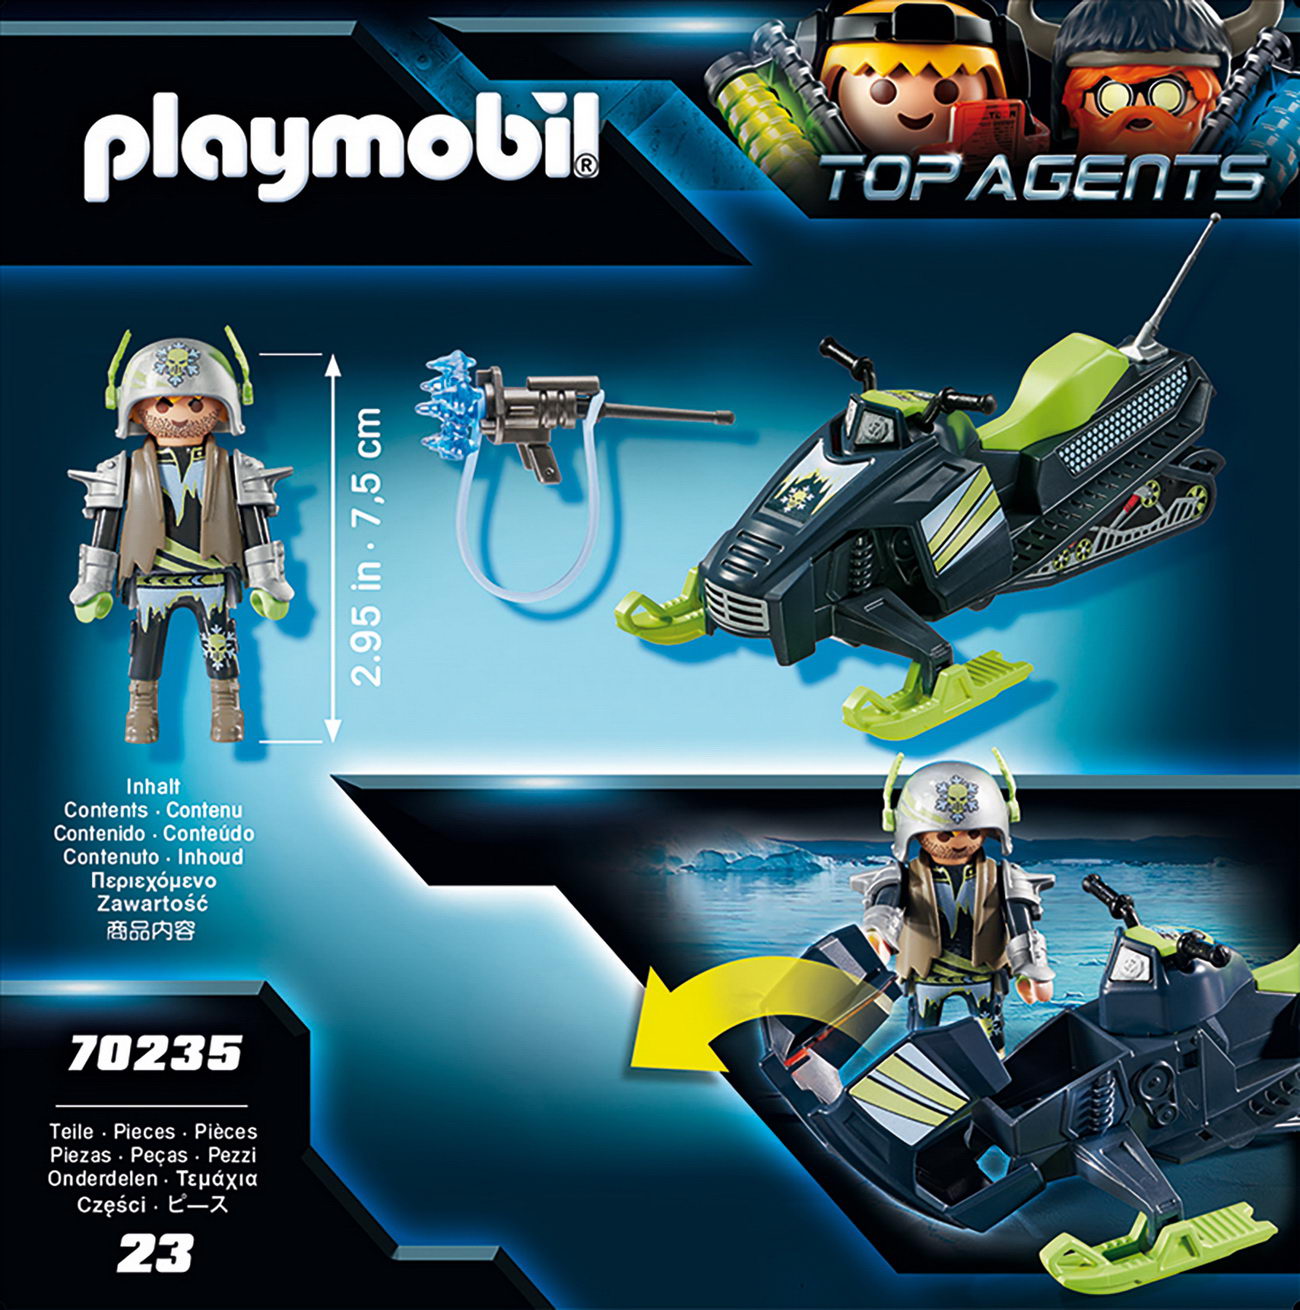 Playmobil 70235 - Arctic Rebels Eisscooter - Top Agents